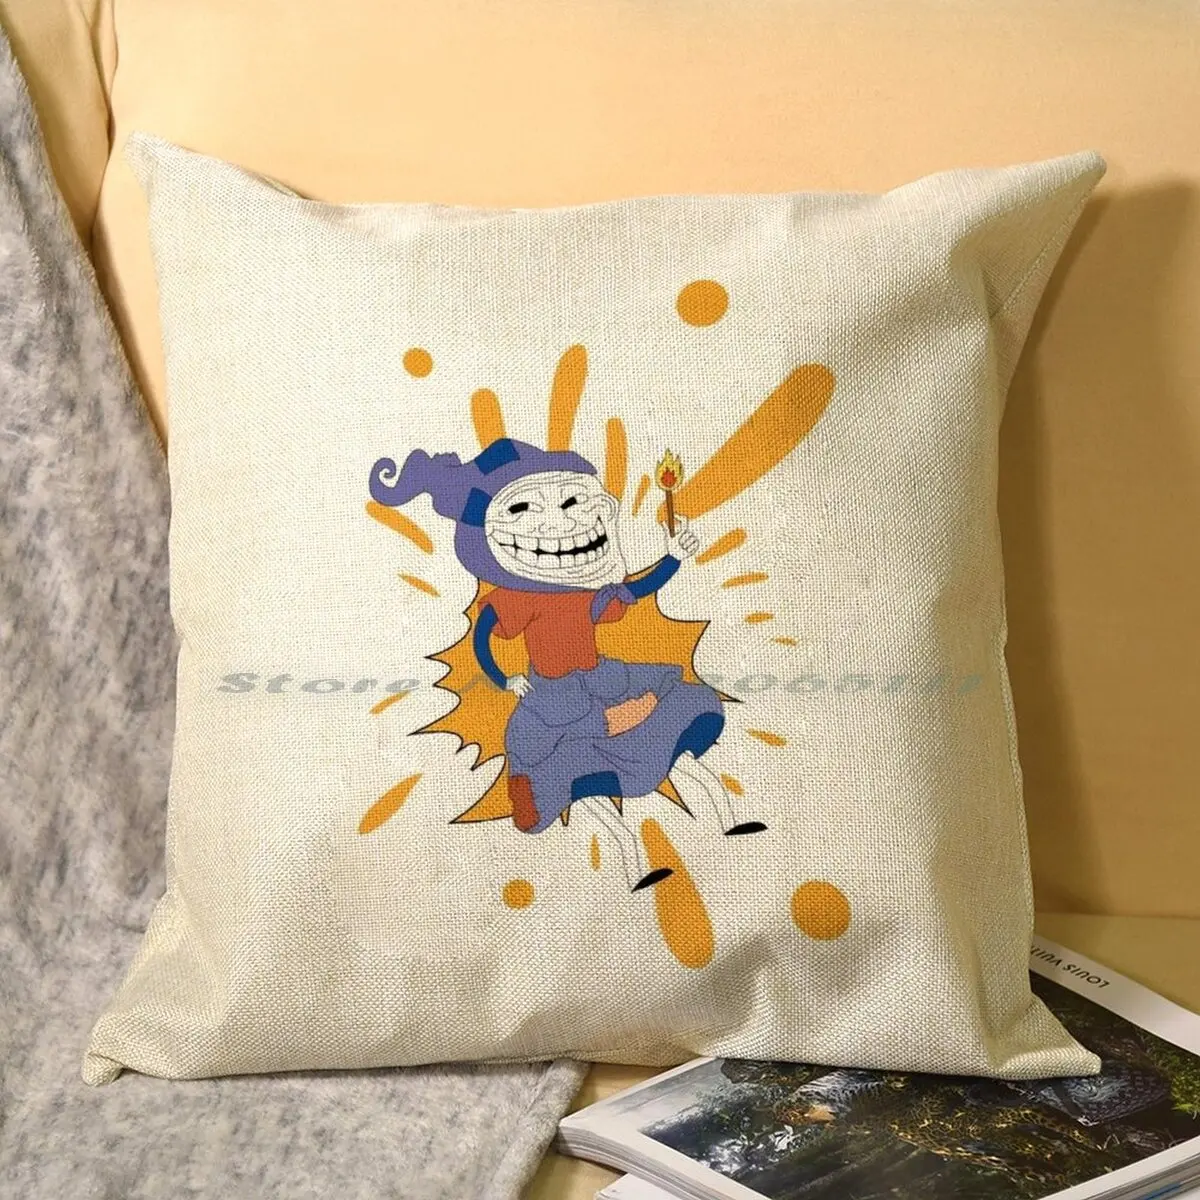 Humor Pillow Sham Cartoon Style Troll Face Guy for Annoying Popular Artful  Internet Meme Design, Decorative Standard King Size Printed Pillowcase, 36